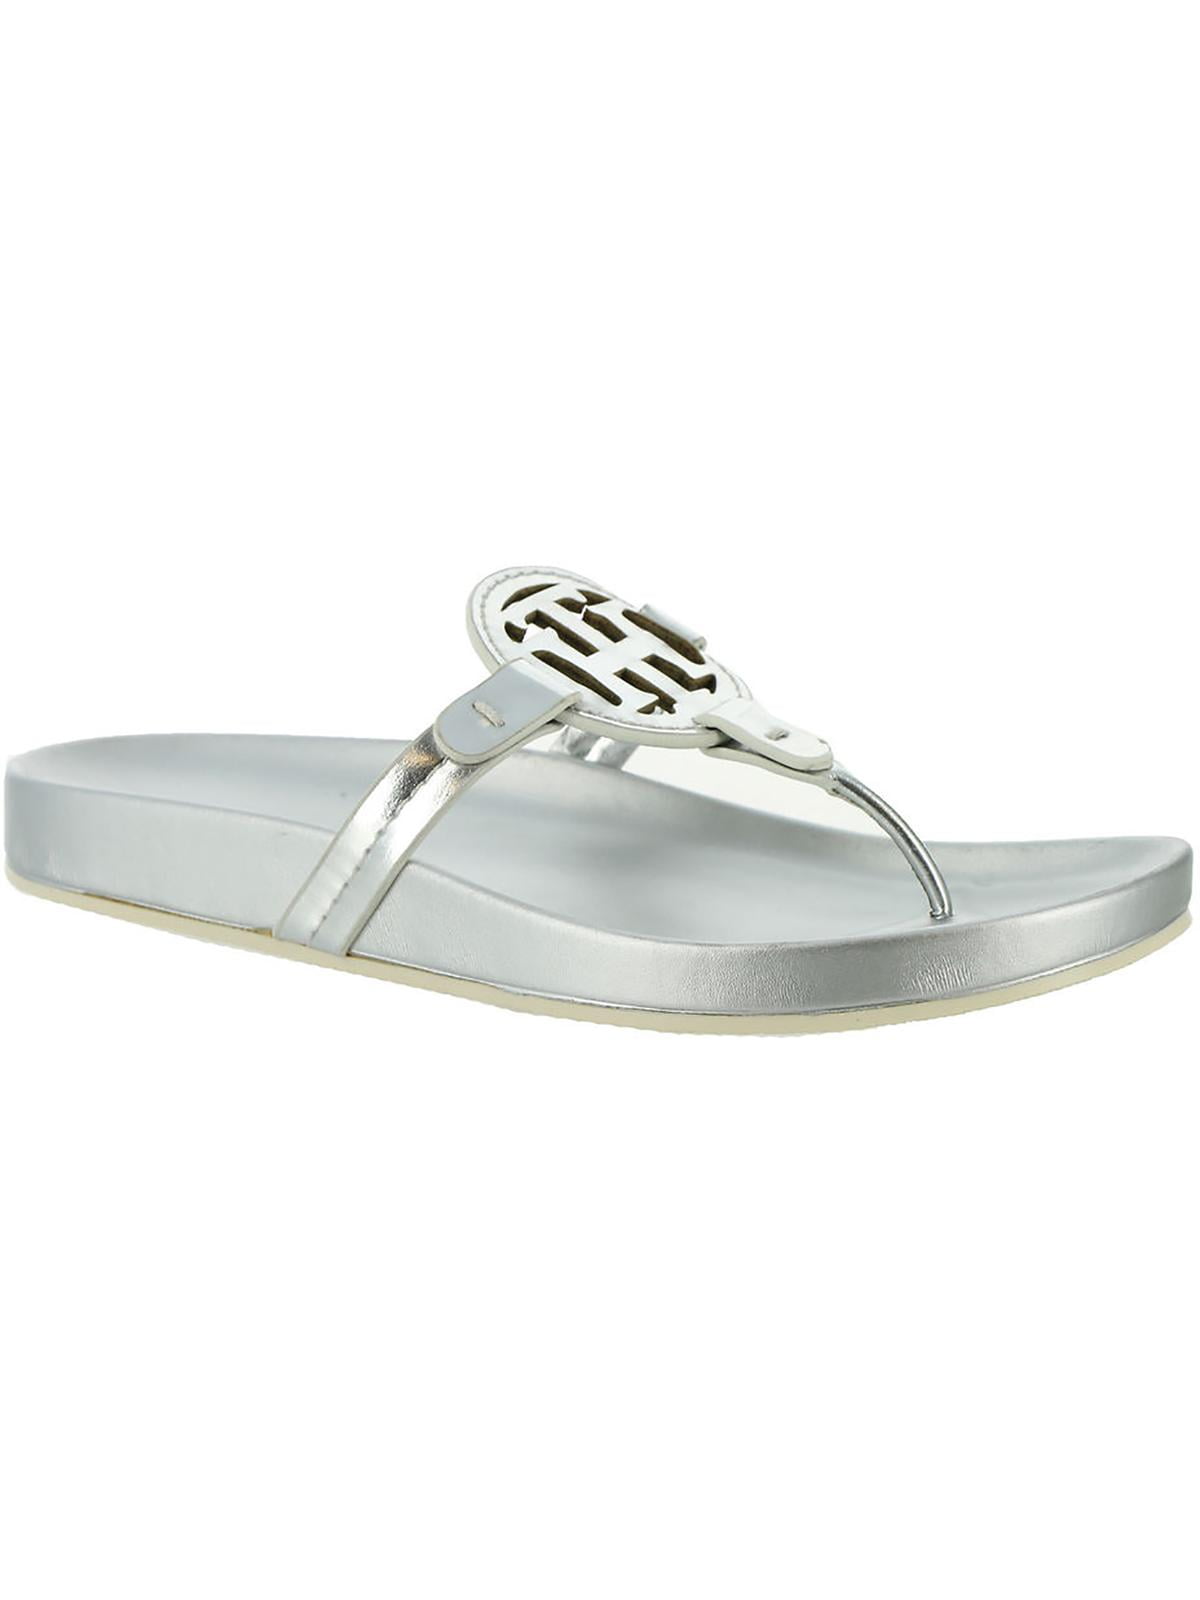 Tommy Hilfiger Womens Relina Leather Metallic Thong Sandals - Walmart.com